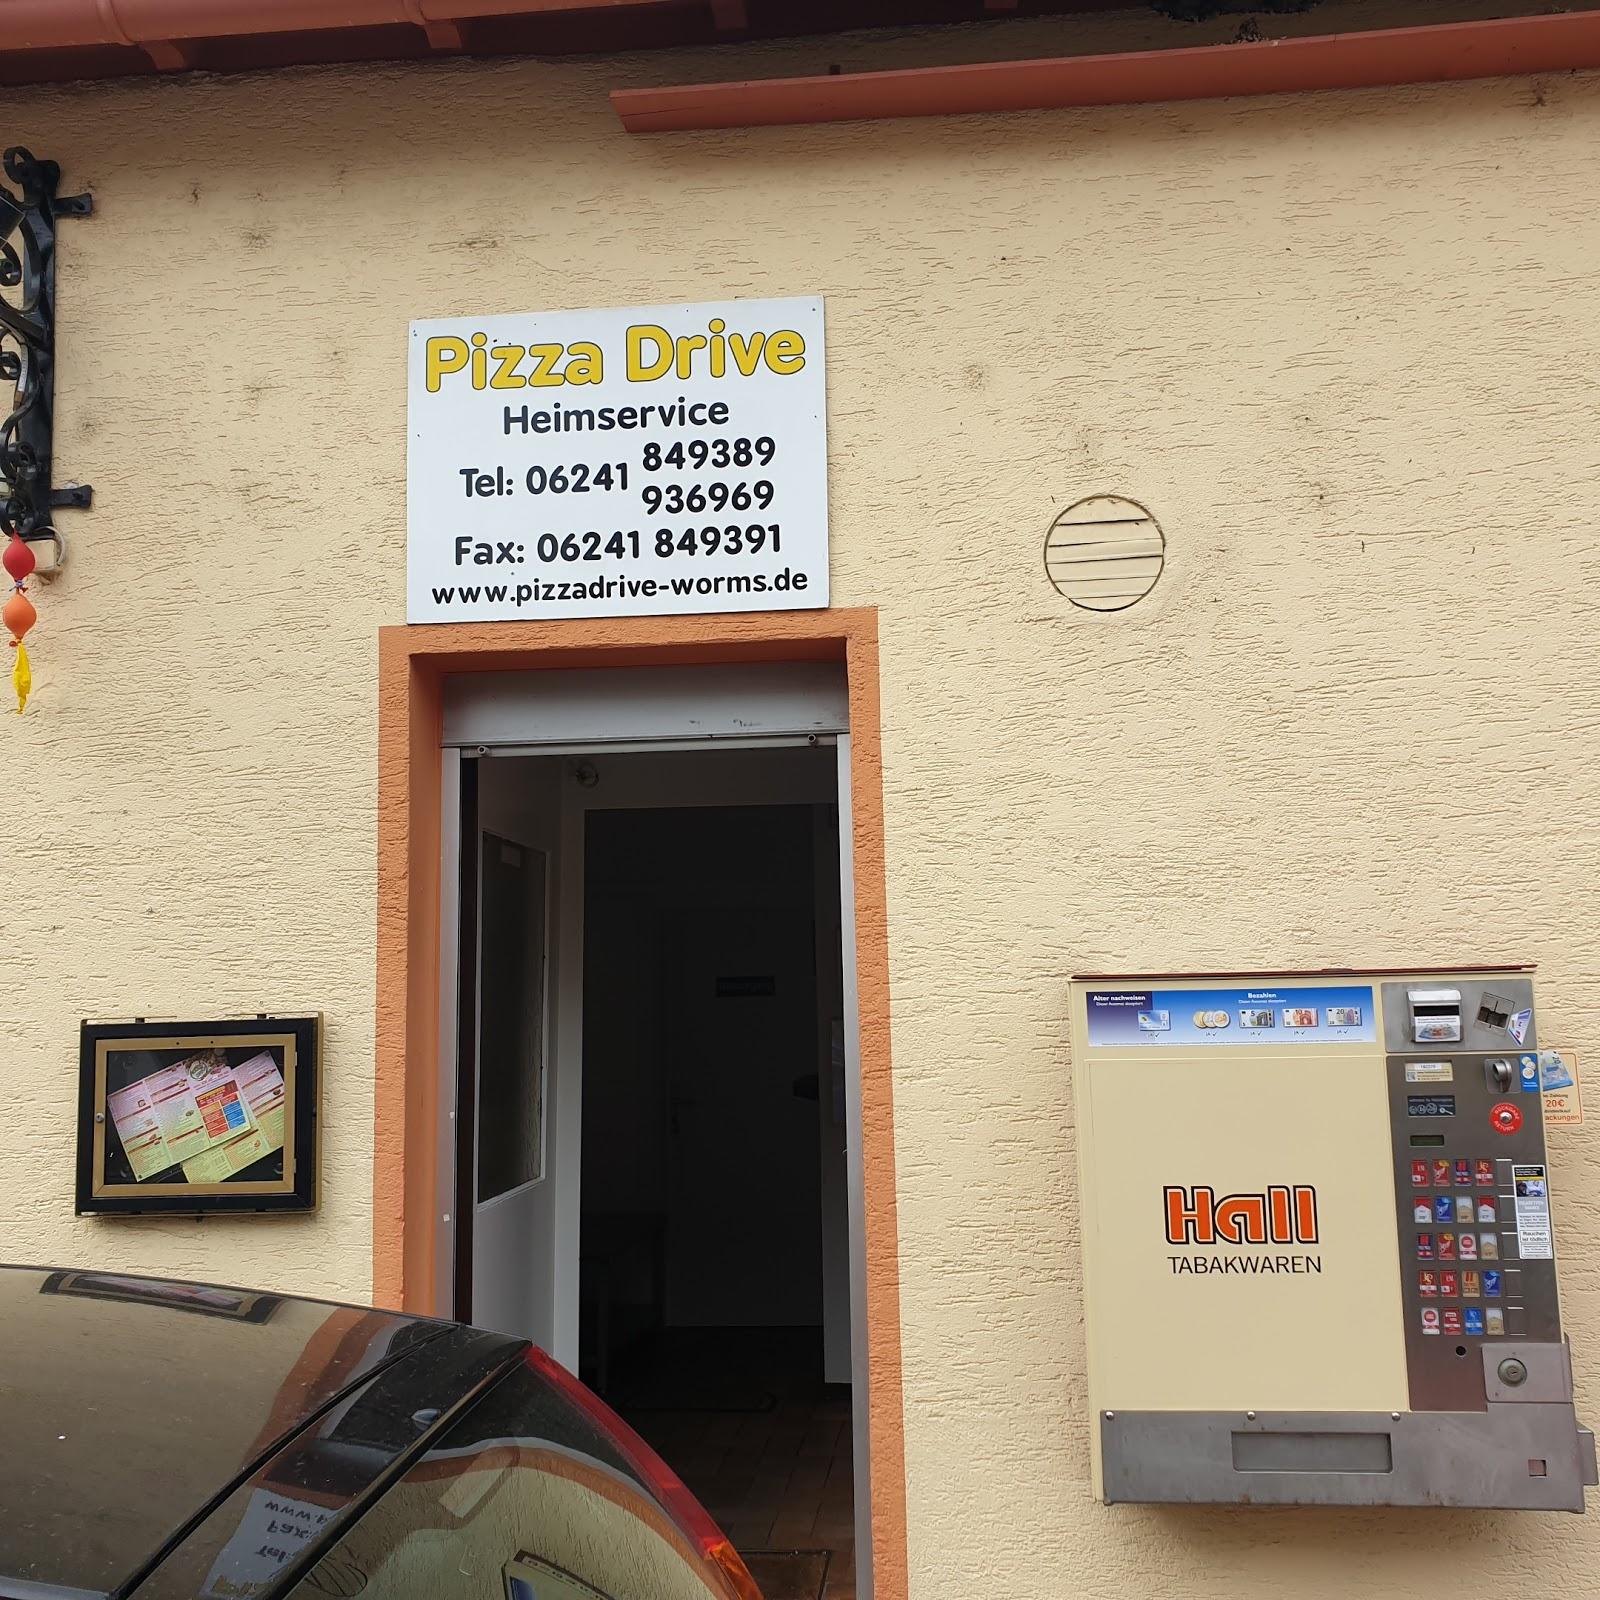 Restaurant "Pizza Drive Heimservice" in Worms